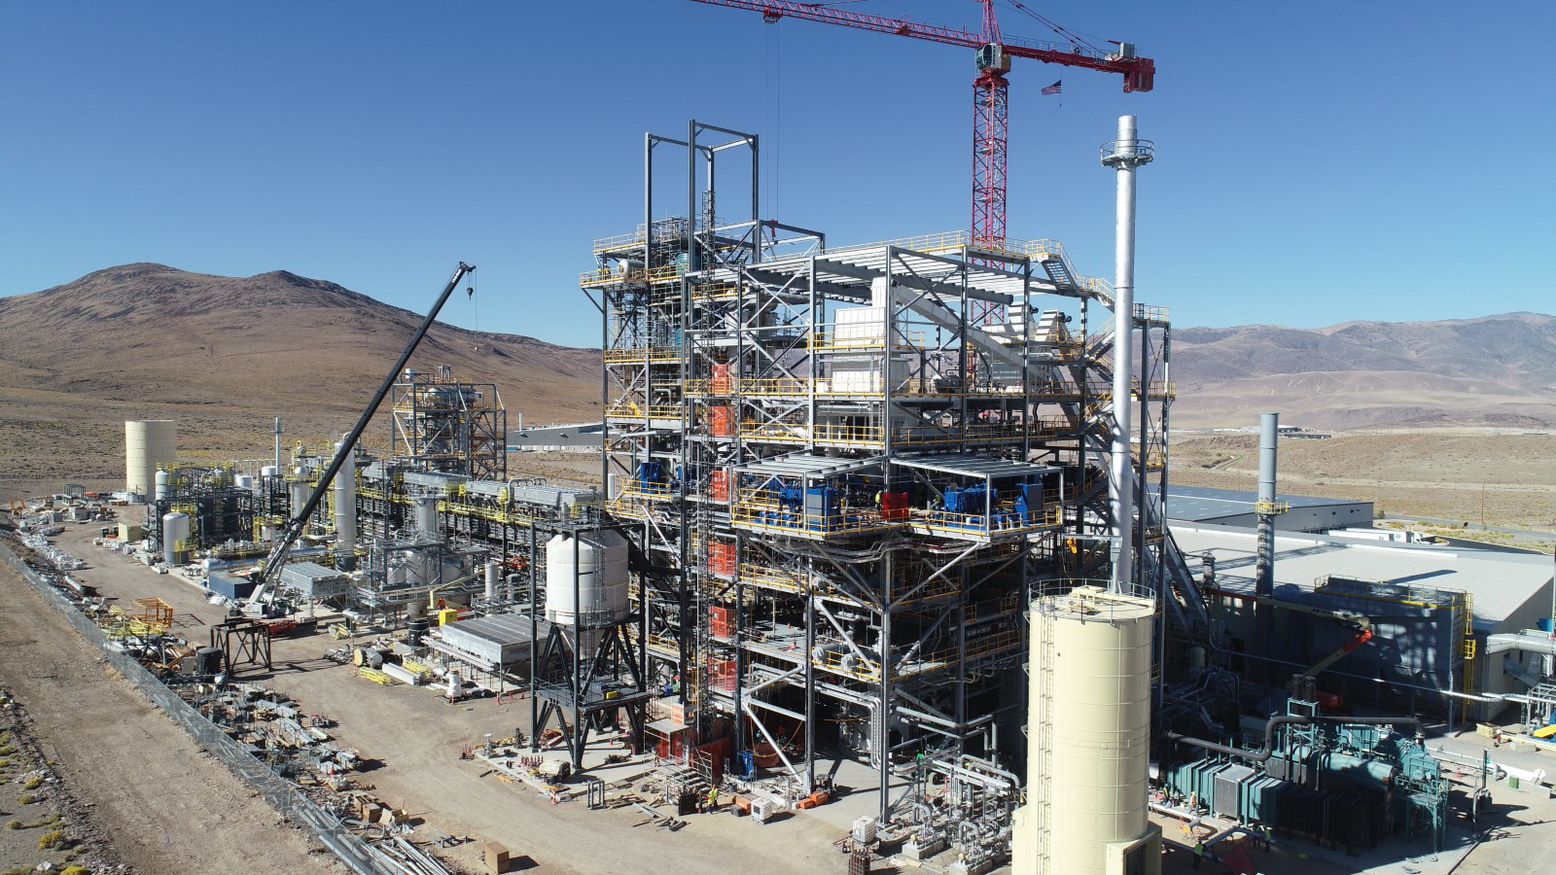 Sierra Nevada Bio - Refinery